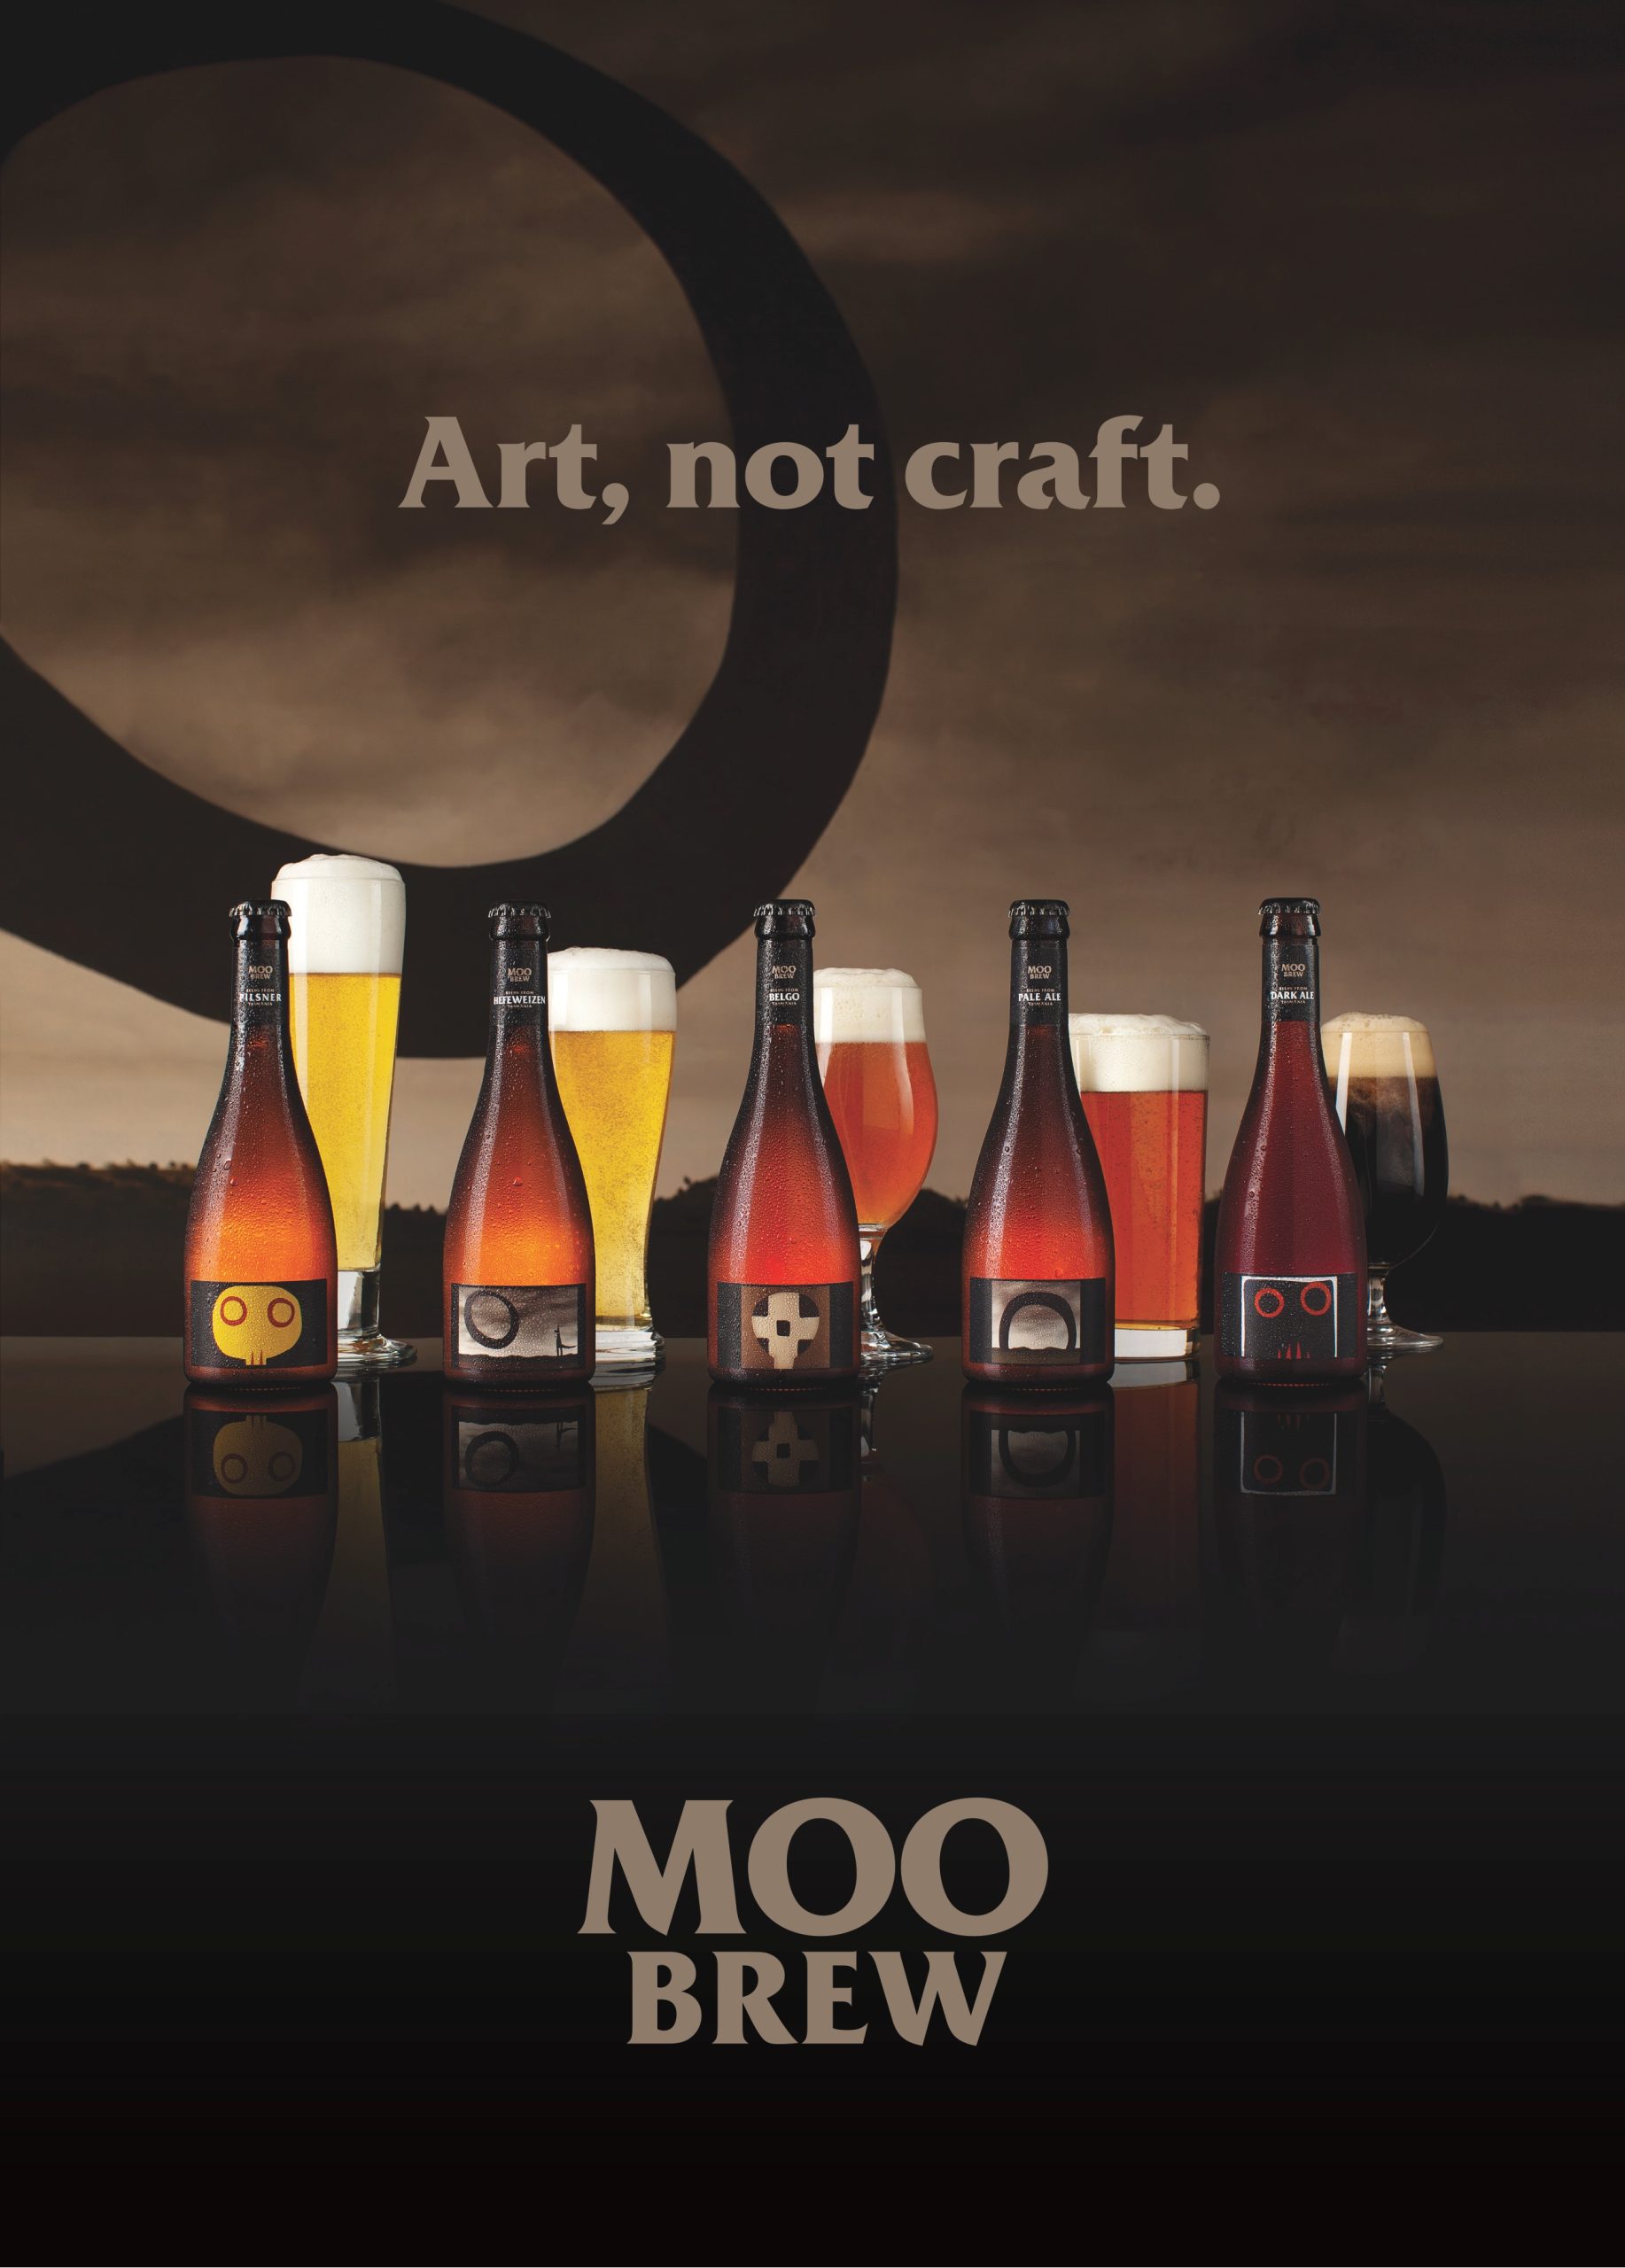 Moo Brew: Art, not craft